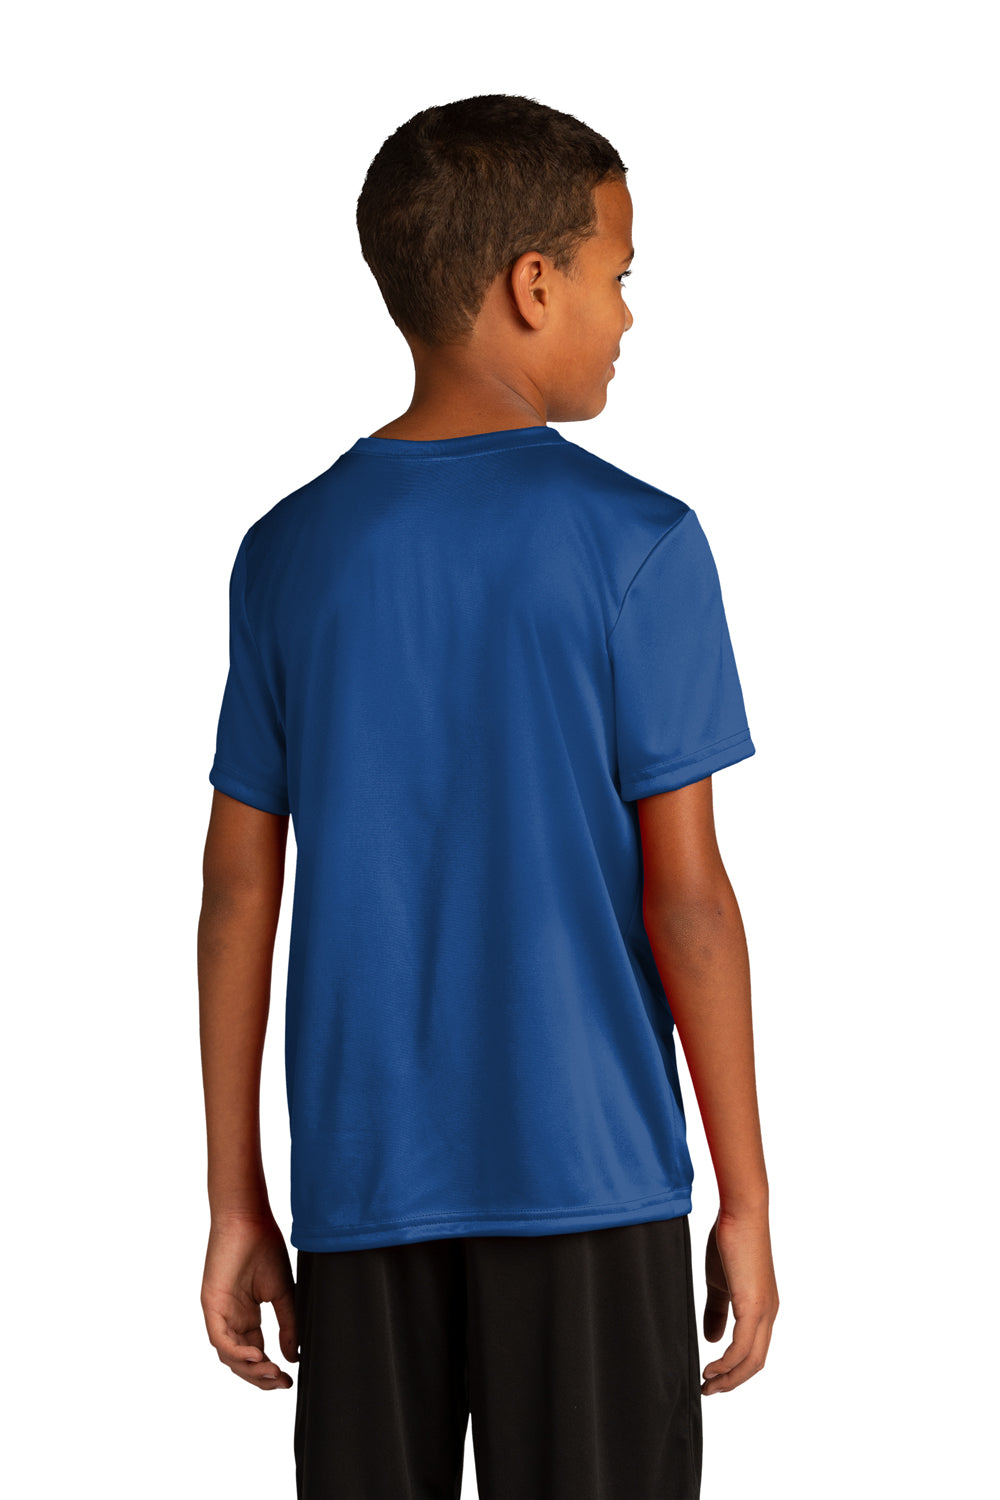 Sport-Tek YST720 Re-Compete PosiCharge Short Sleeve Crewneck T-Shirt True Royal Blue Back